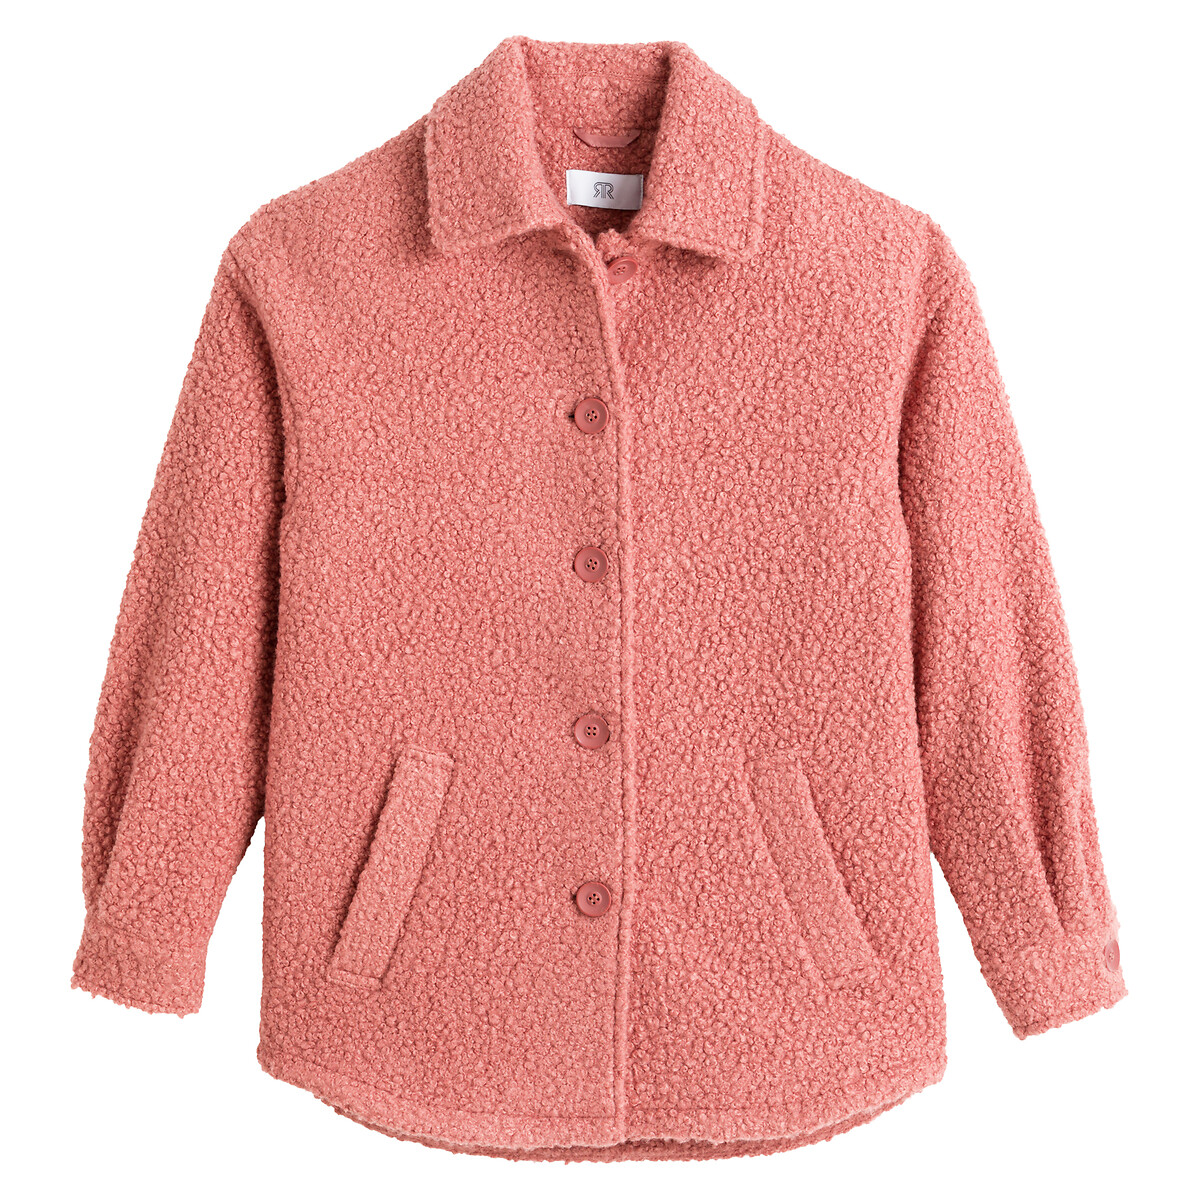 Куртка LaRedoute Легкая под мутон 36 (FR) - 42 (RUS) розовый, размер 36 (FR) - 42 (RUS) Легкая под мутон 36 (FR) - 42 (RUS) розовый - фото 5